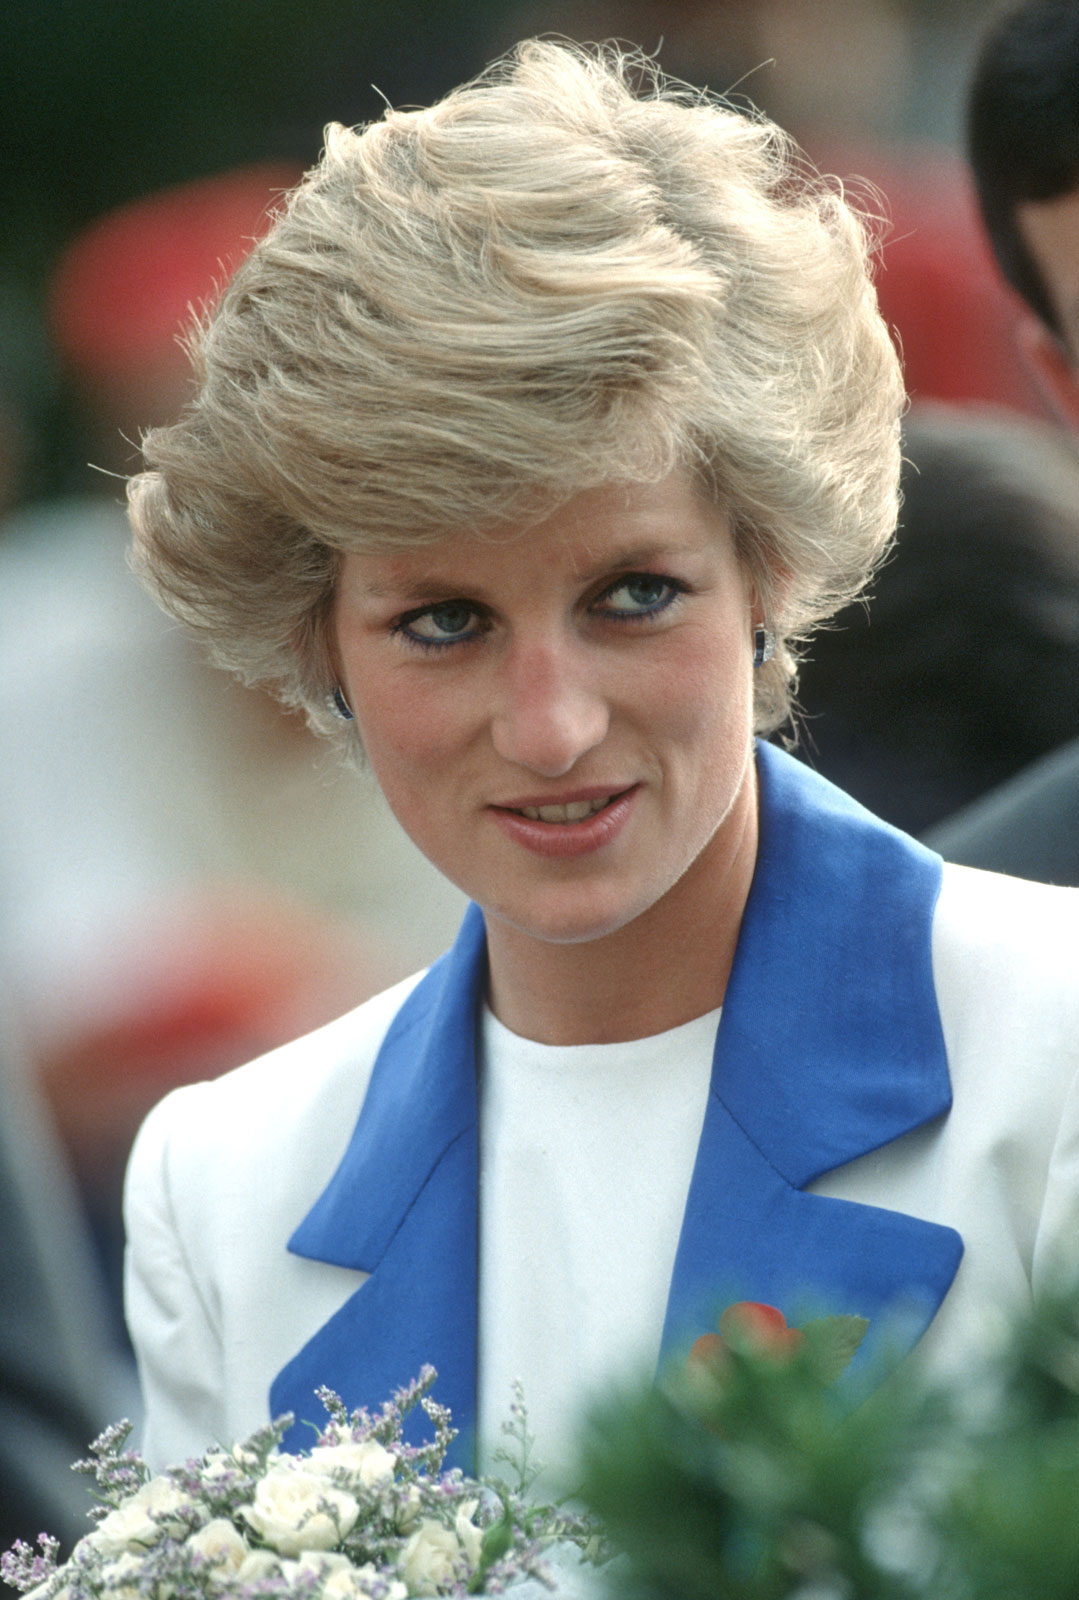 Princess Diana interview With Martin Bashir won't be subject of Scotland Yard probe!